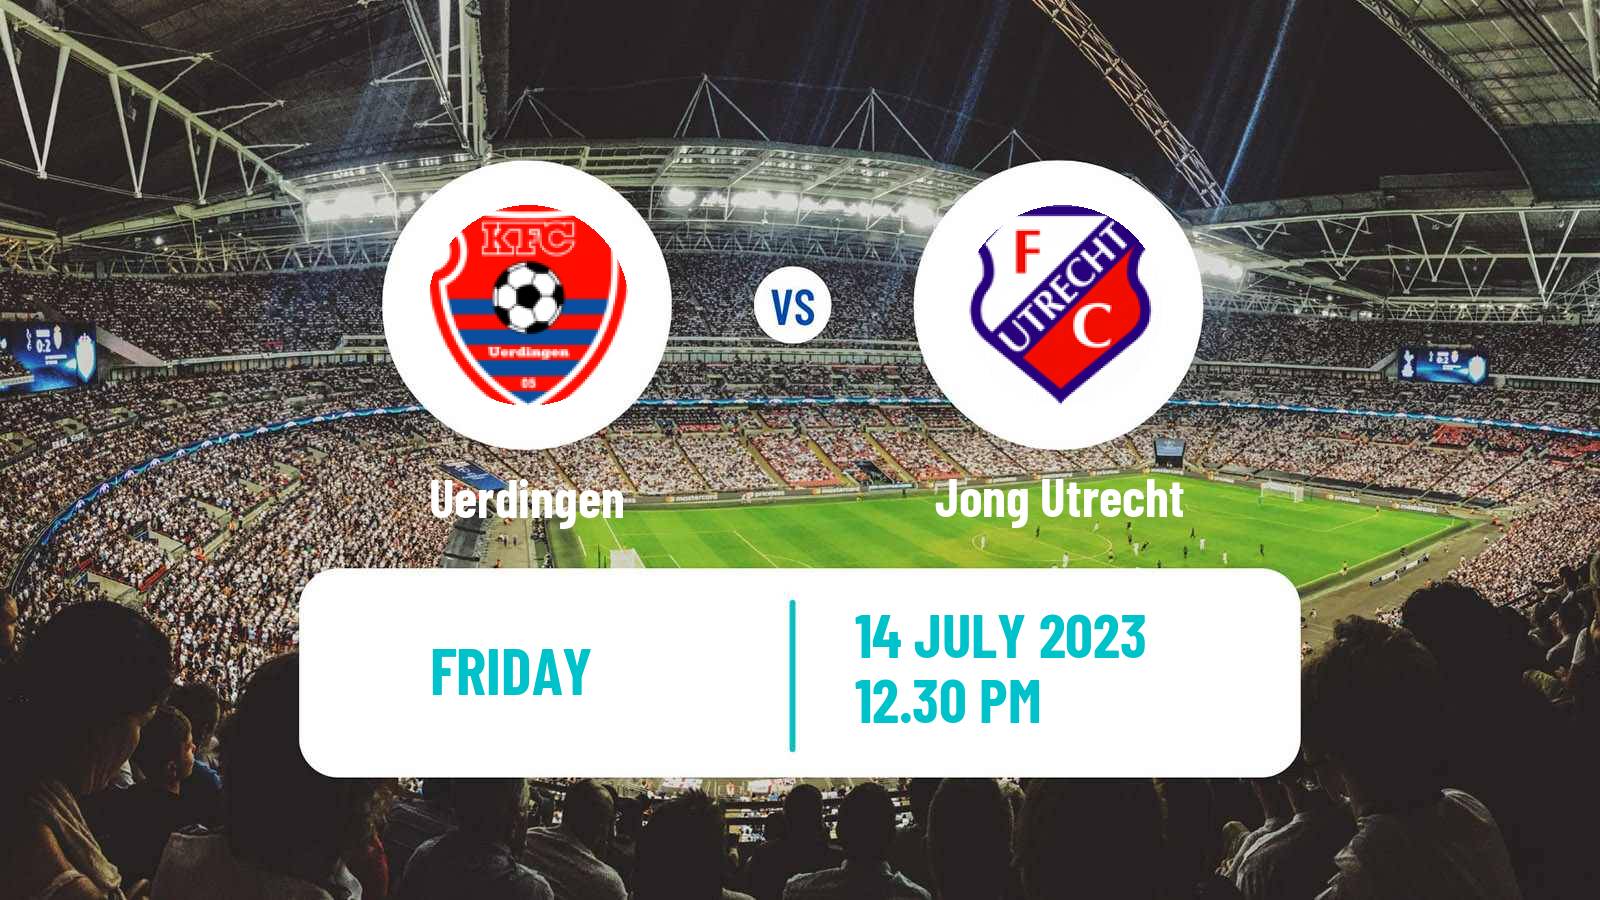 Soccer Club Friendly Uerdingen - Jong Utrecht